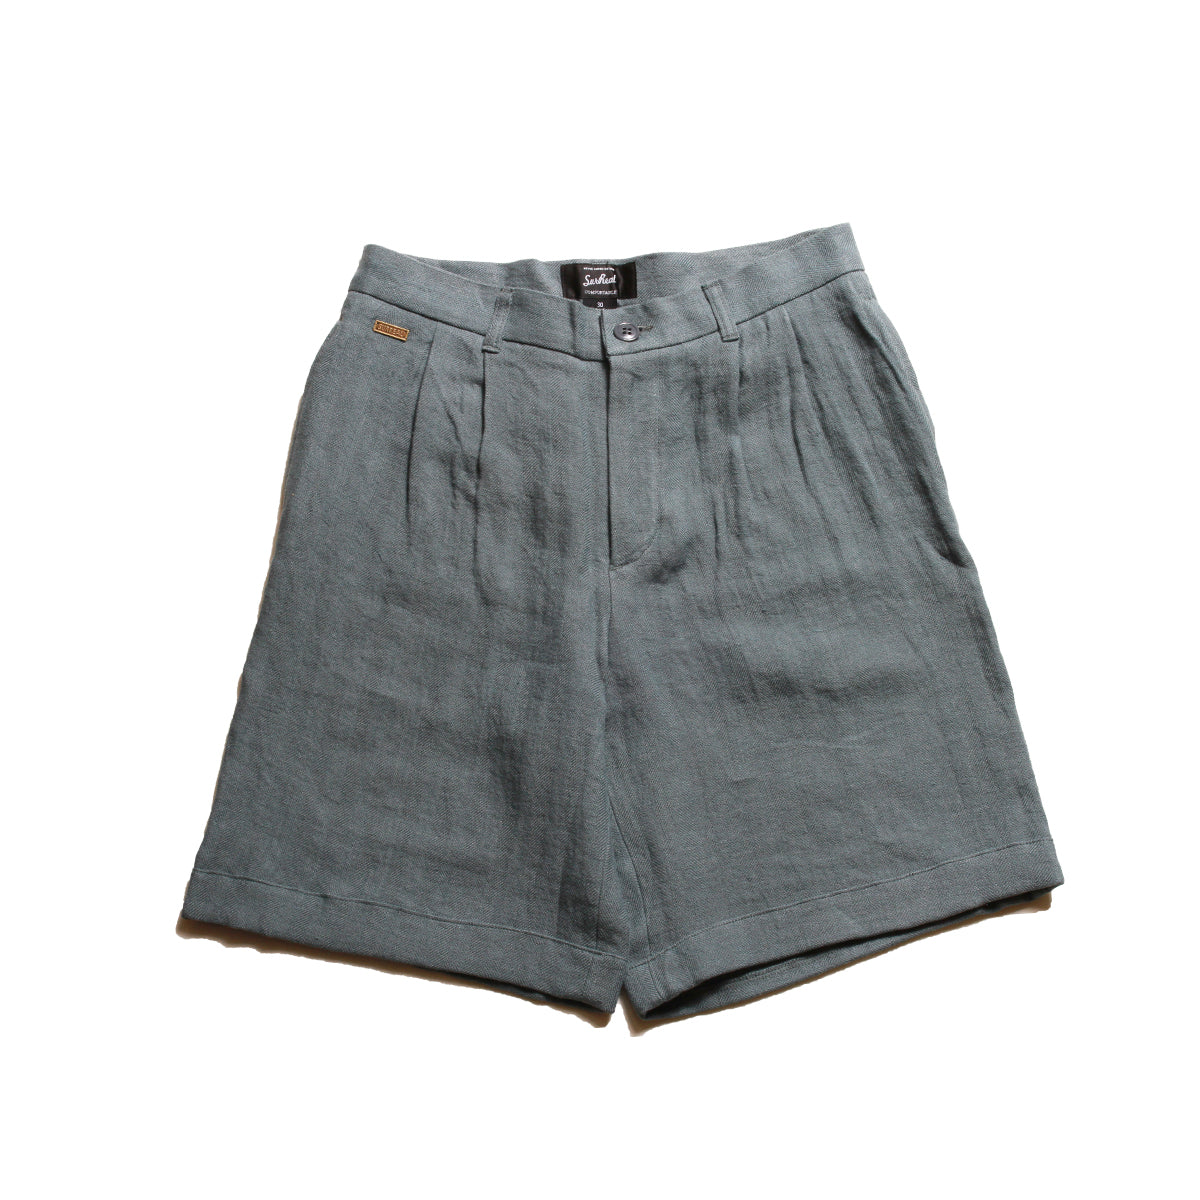 Jose_Linen 2-Tuck Shorts